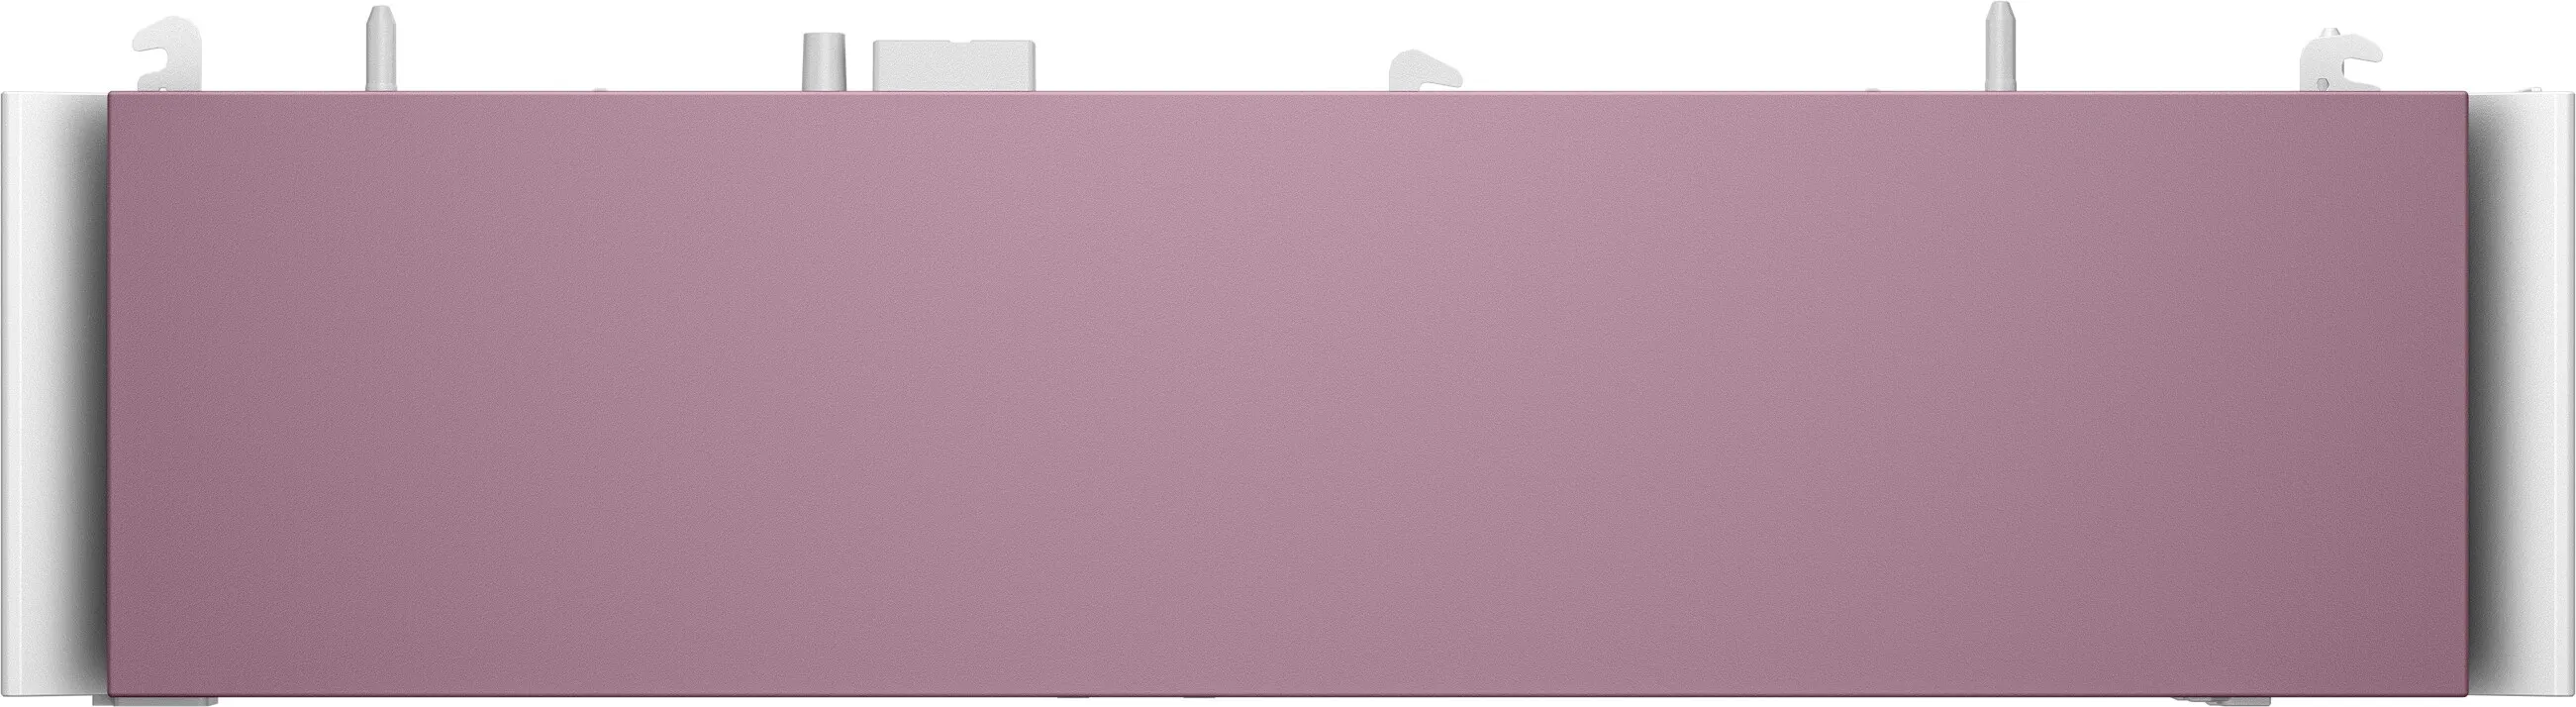 Vente HP Clr LJ Purple 550 Sheet Paper Tray HP au meilleur prix - visuel 6